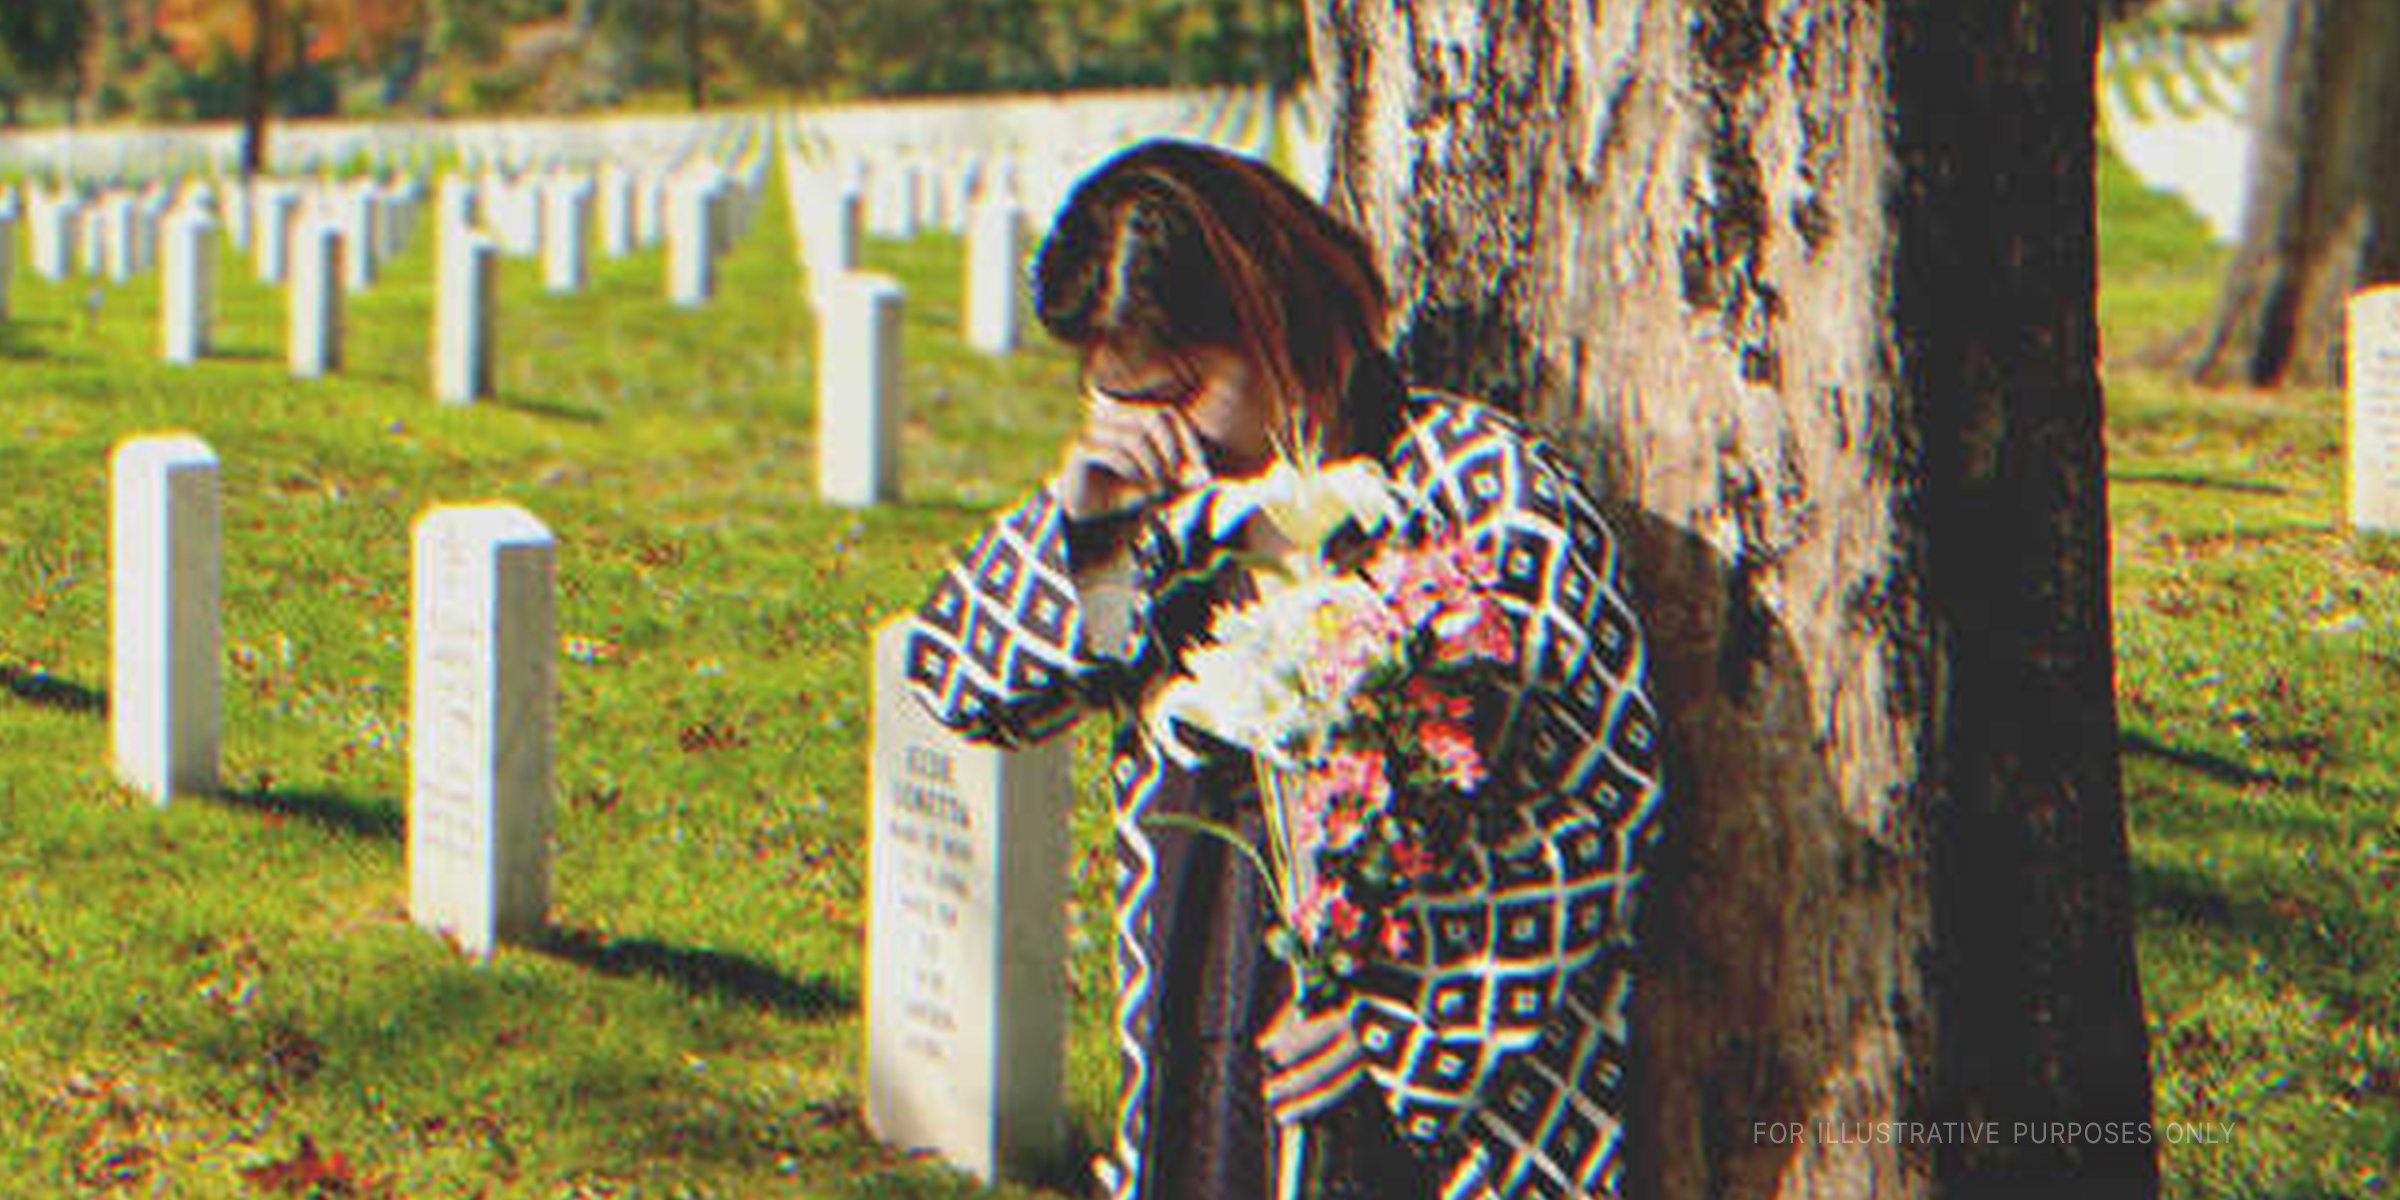 Girl in graveyard. | Shutterstock.com